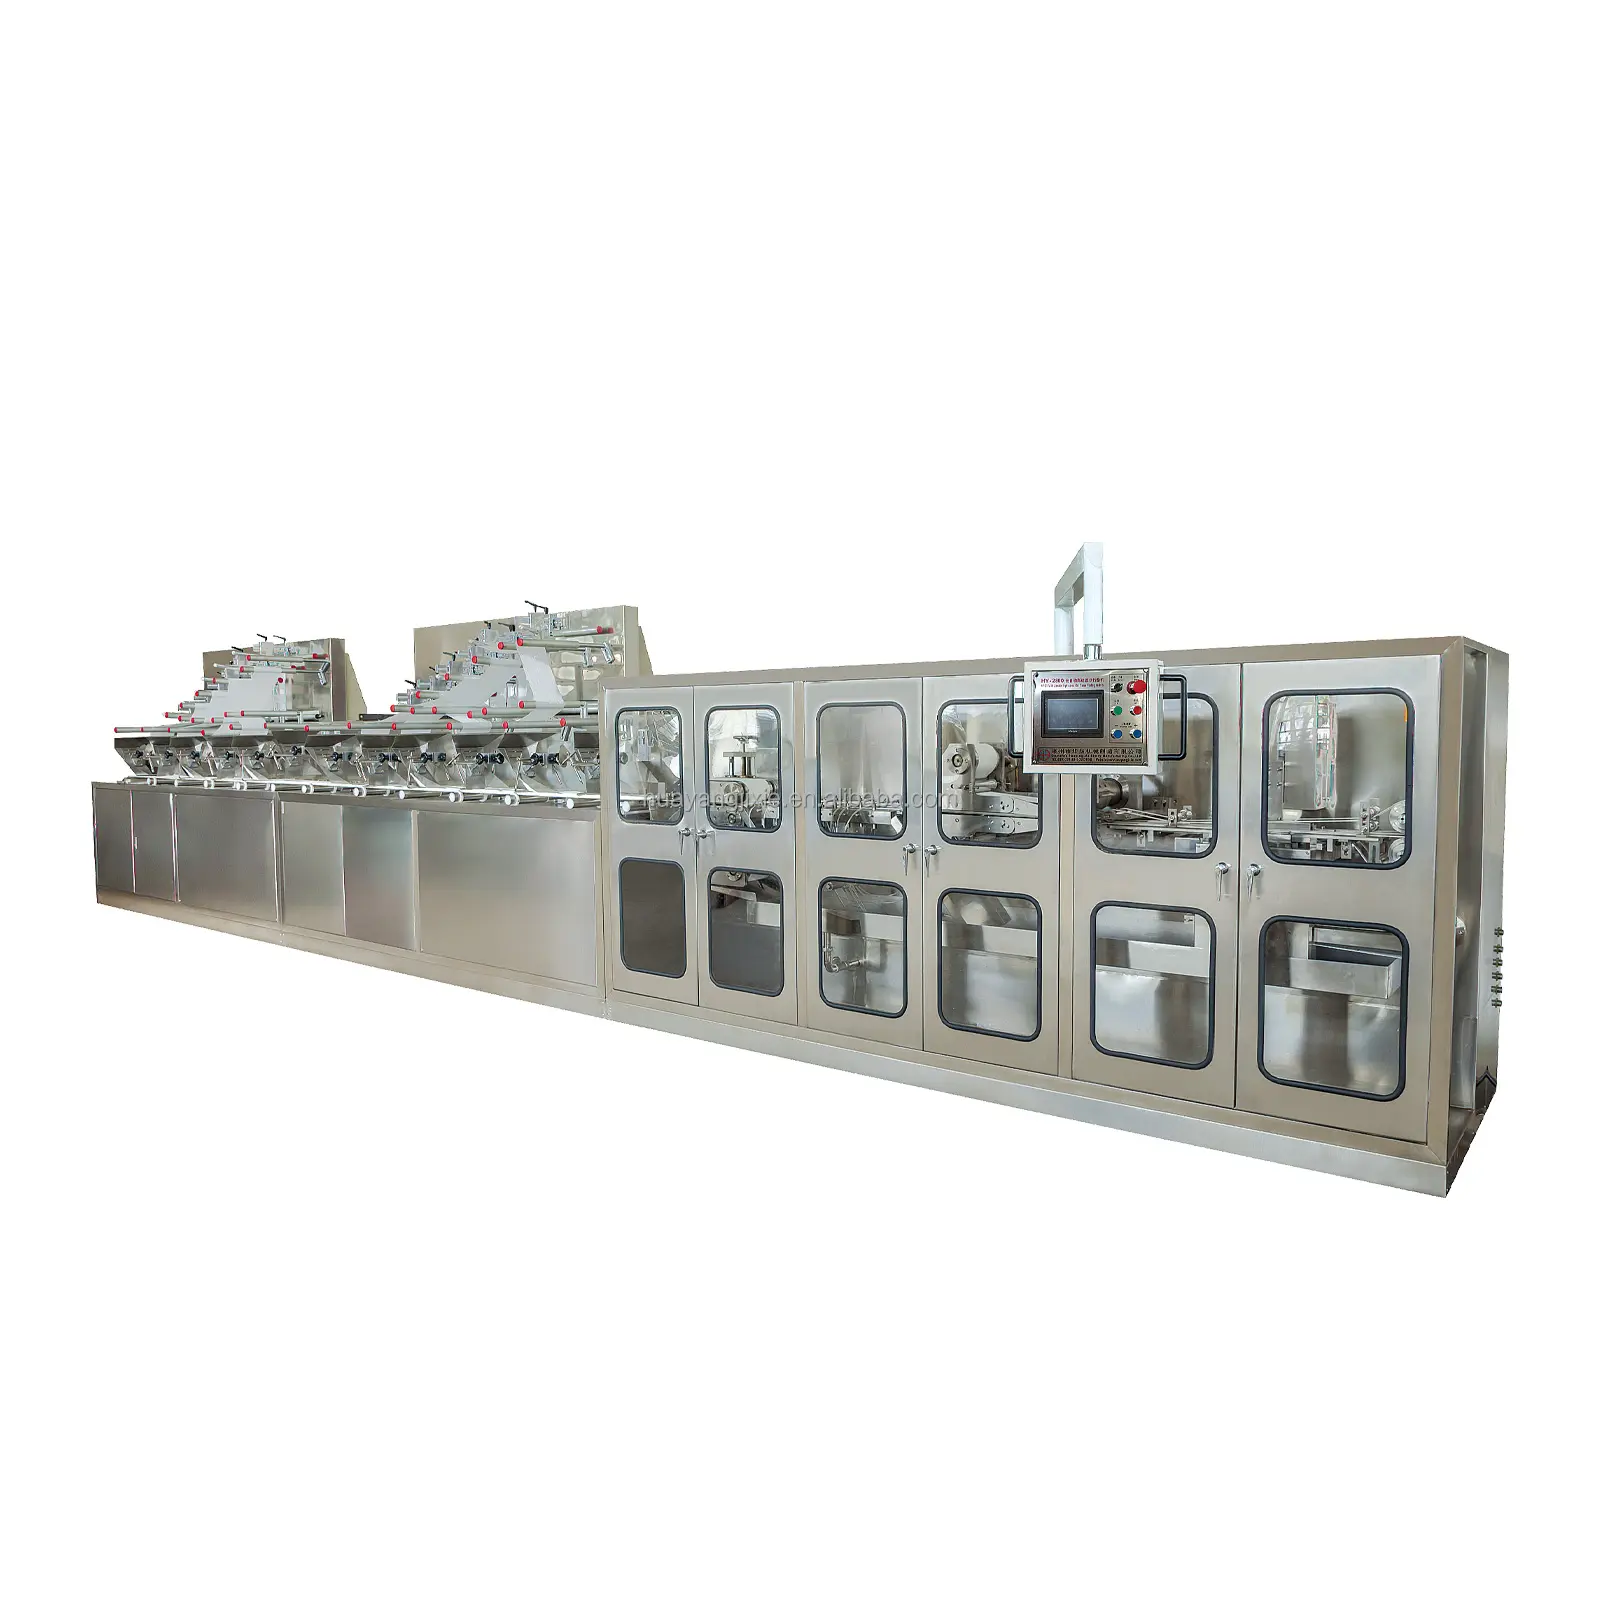 HY-2800 tam otomatik ıslak mendil katlama makinesi (30-120 parça/paket), ıslak mendil makine, ıslak mendil yapma makinesi, ıslak peçete makinesi